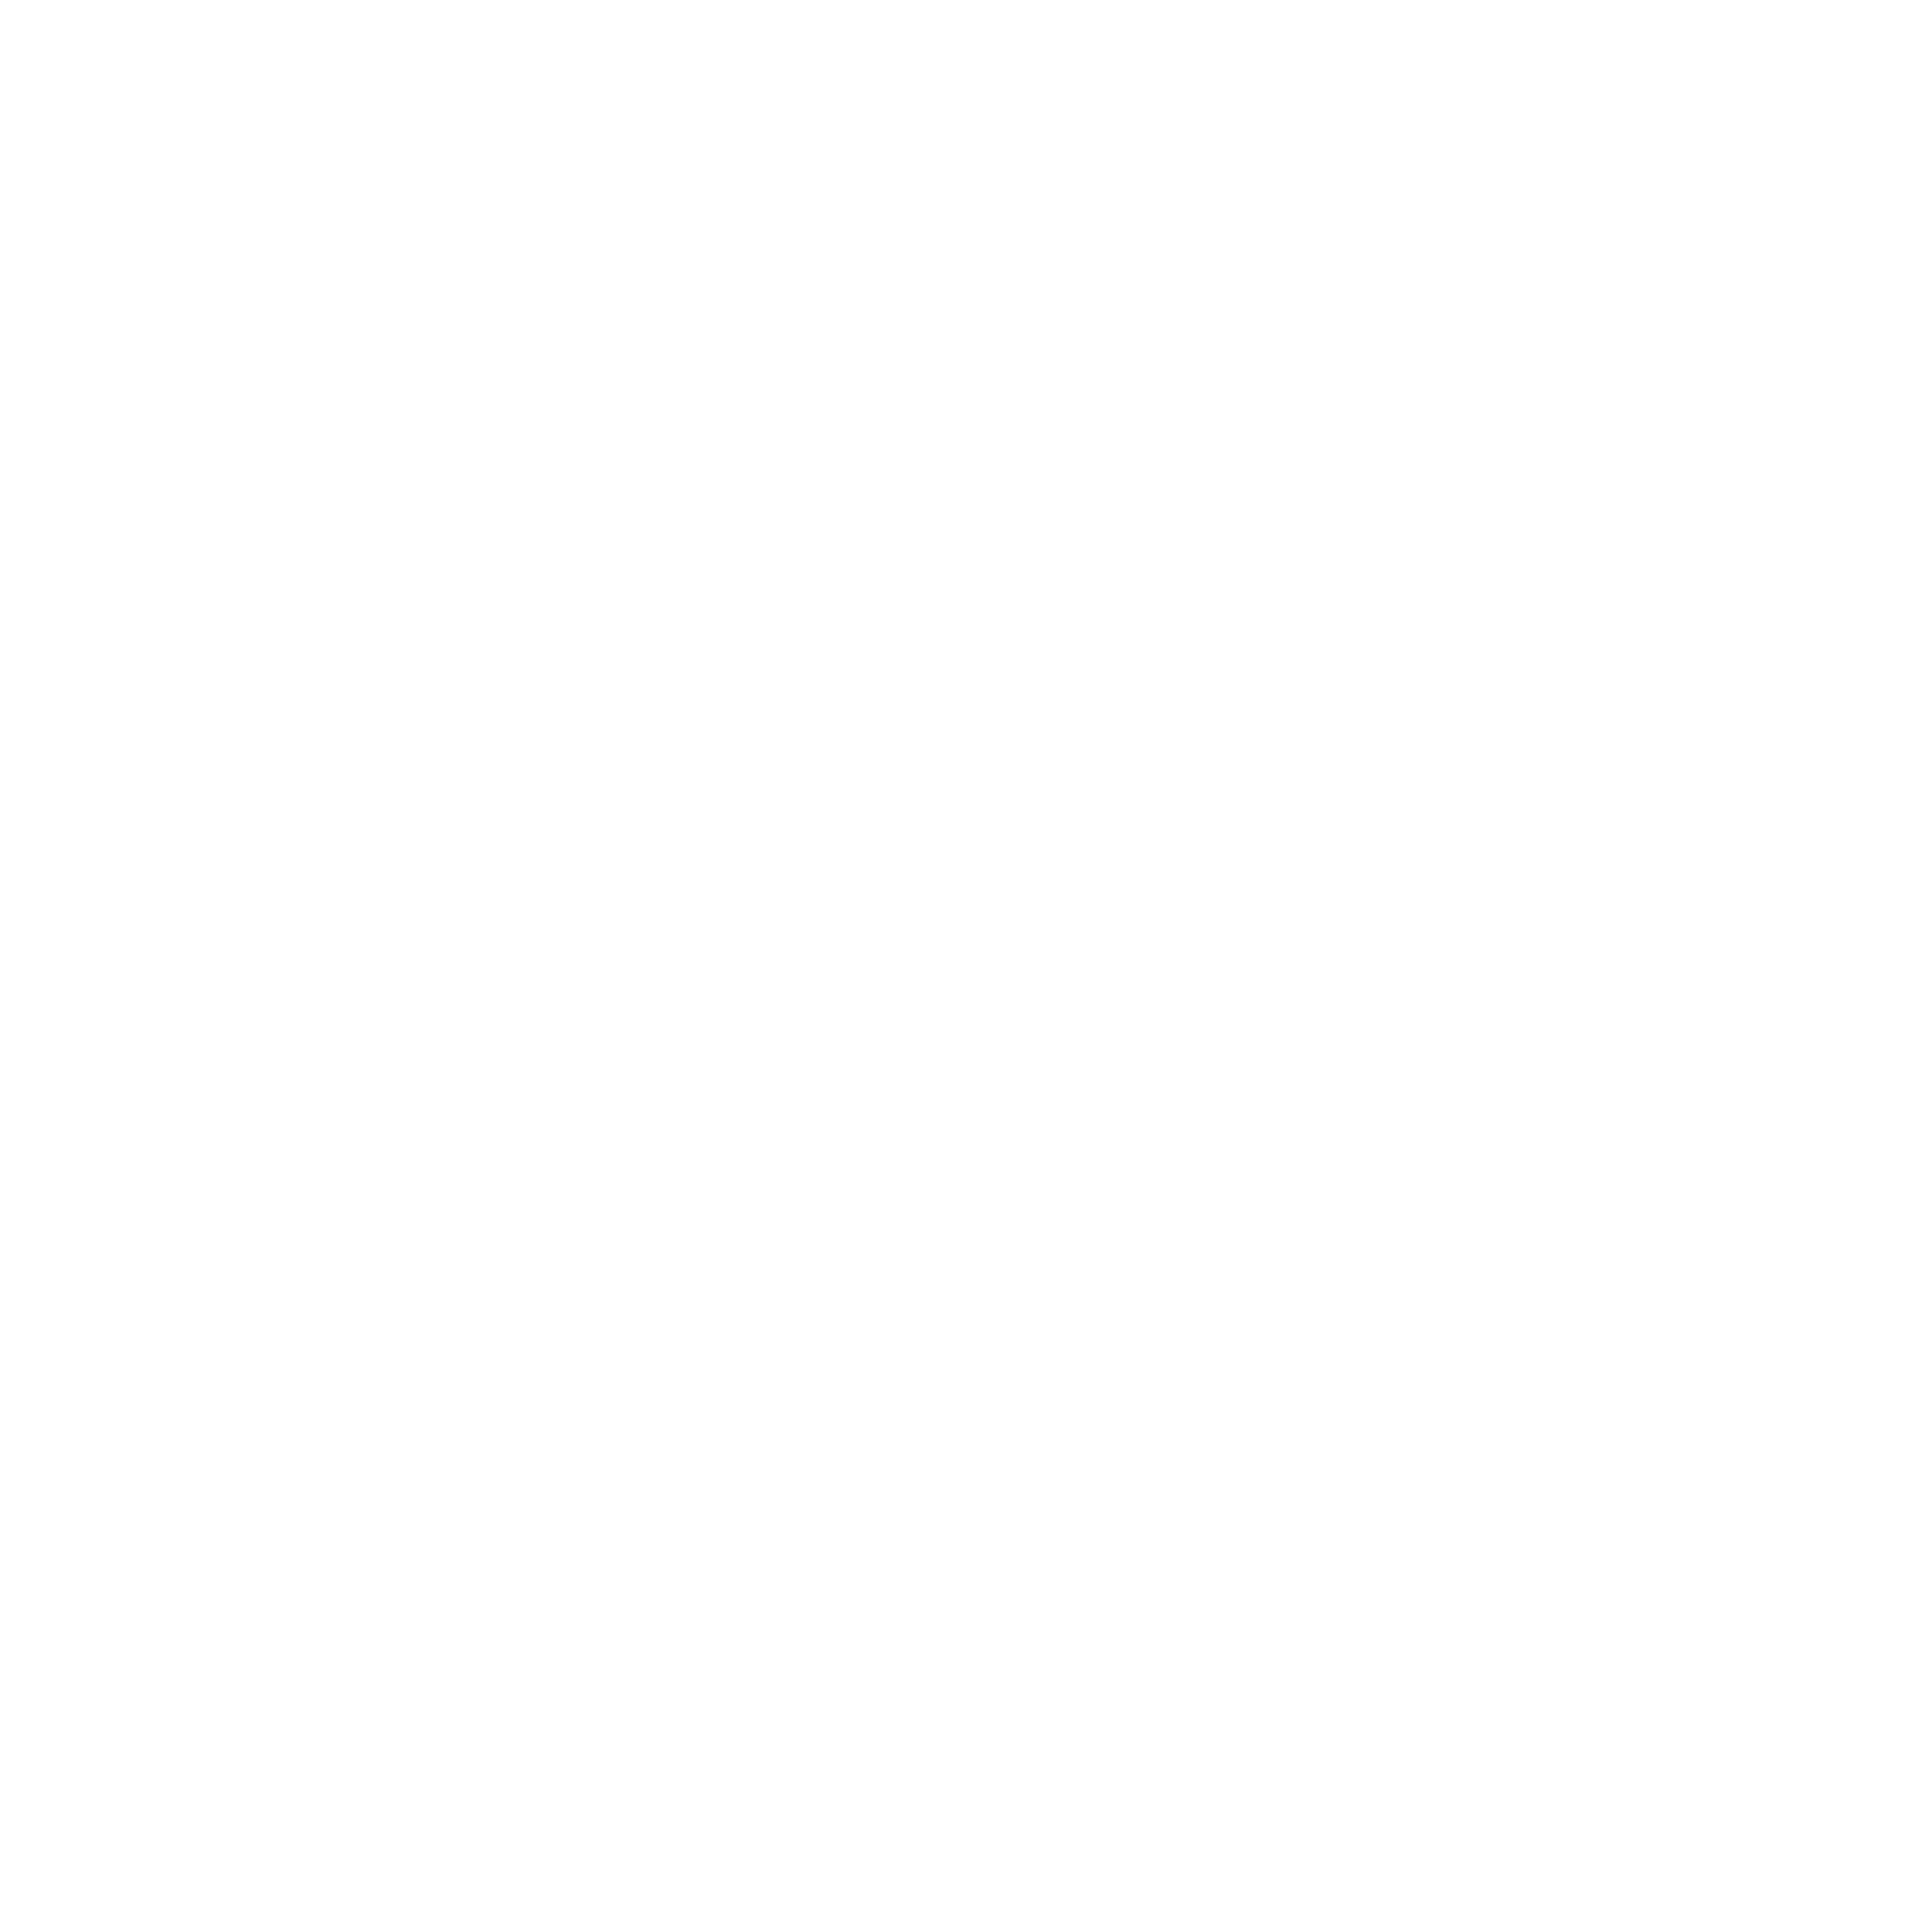 РА SA Media